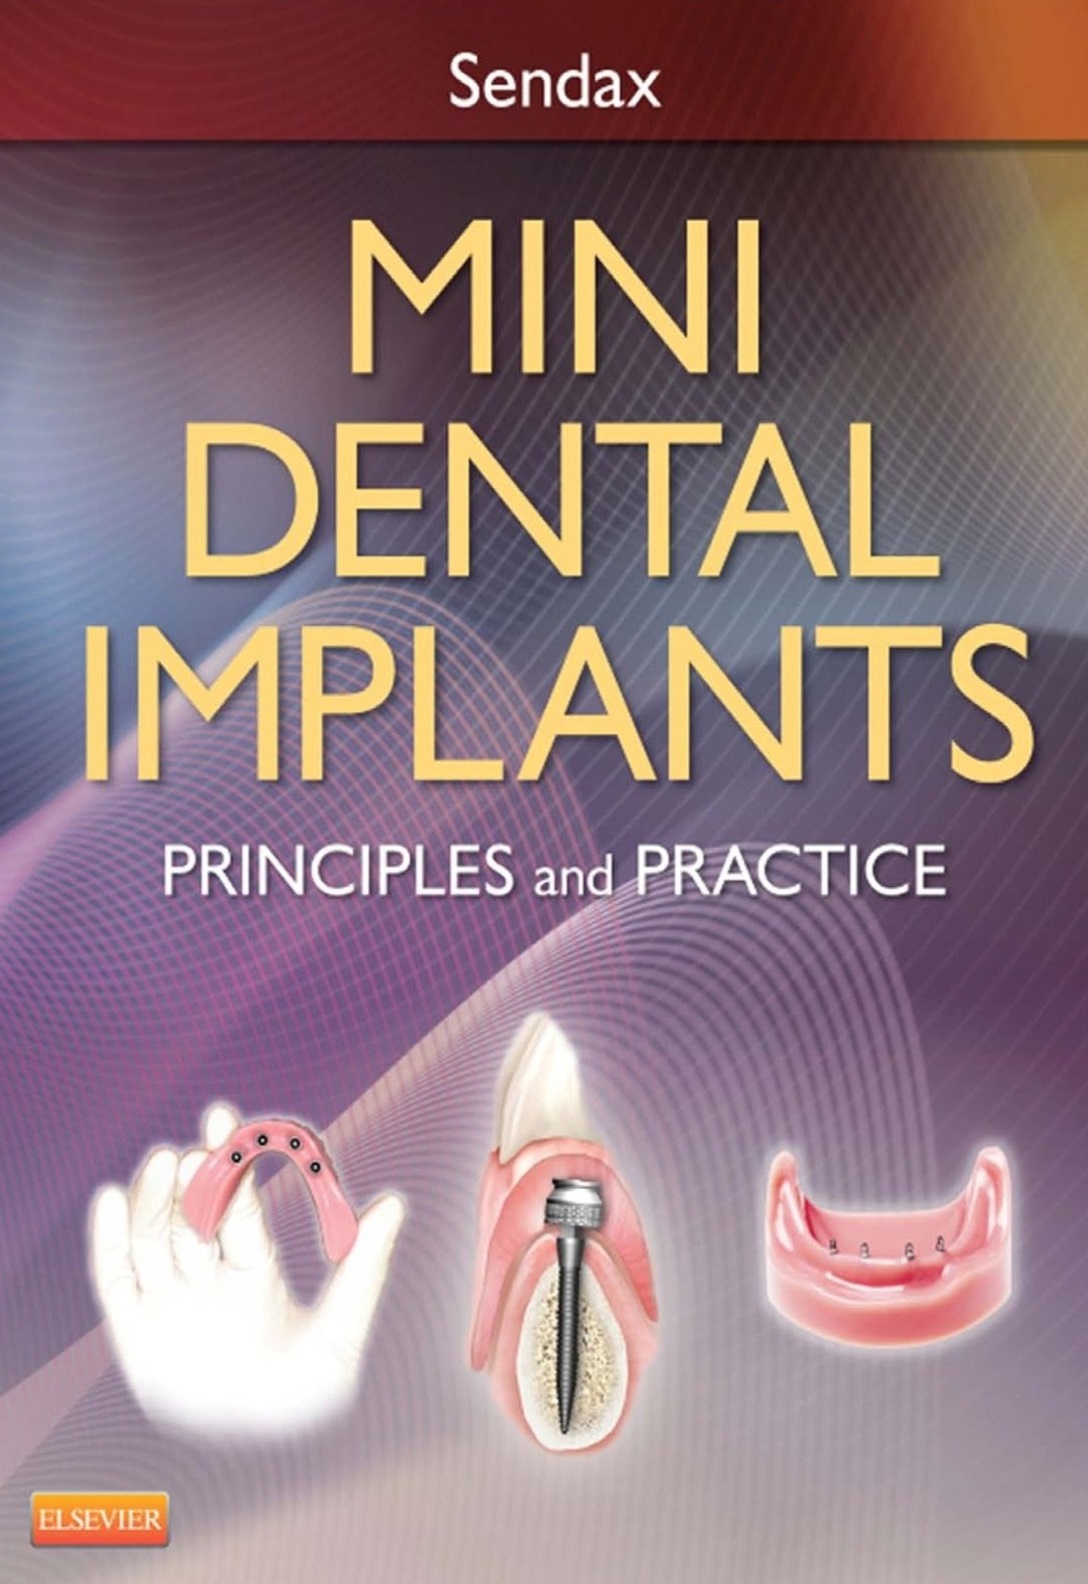 Mini dental implants : principles and practice